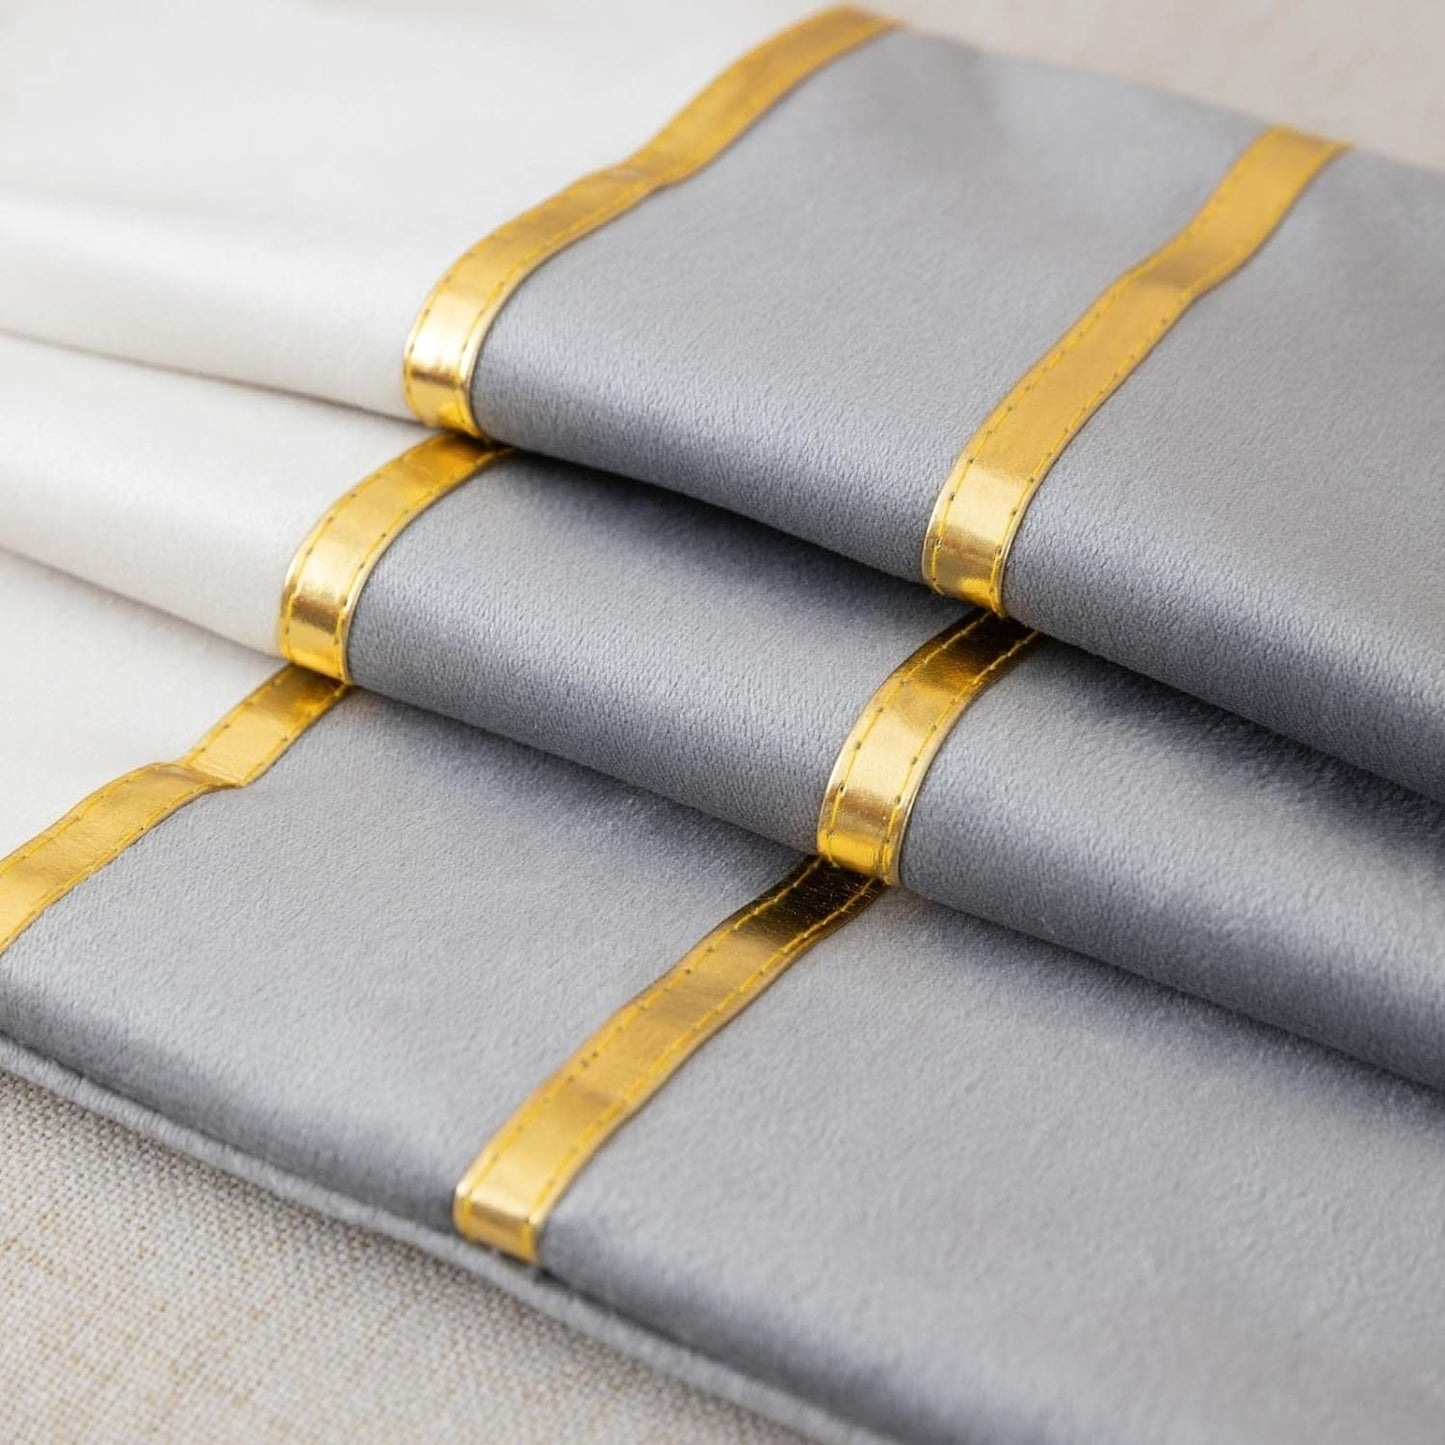 Velvet Decorative Lumbar Cushion Covers Grey